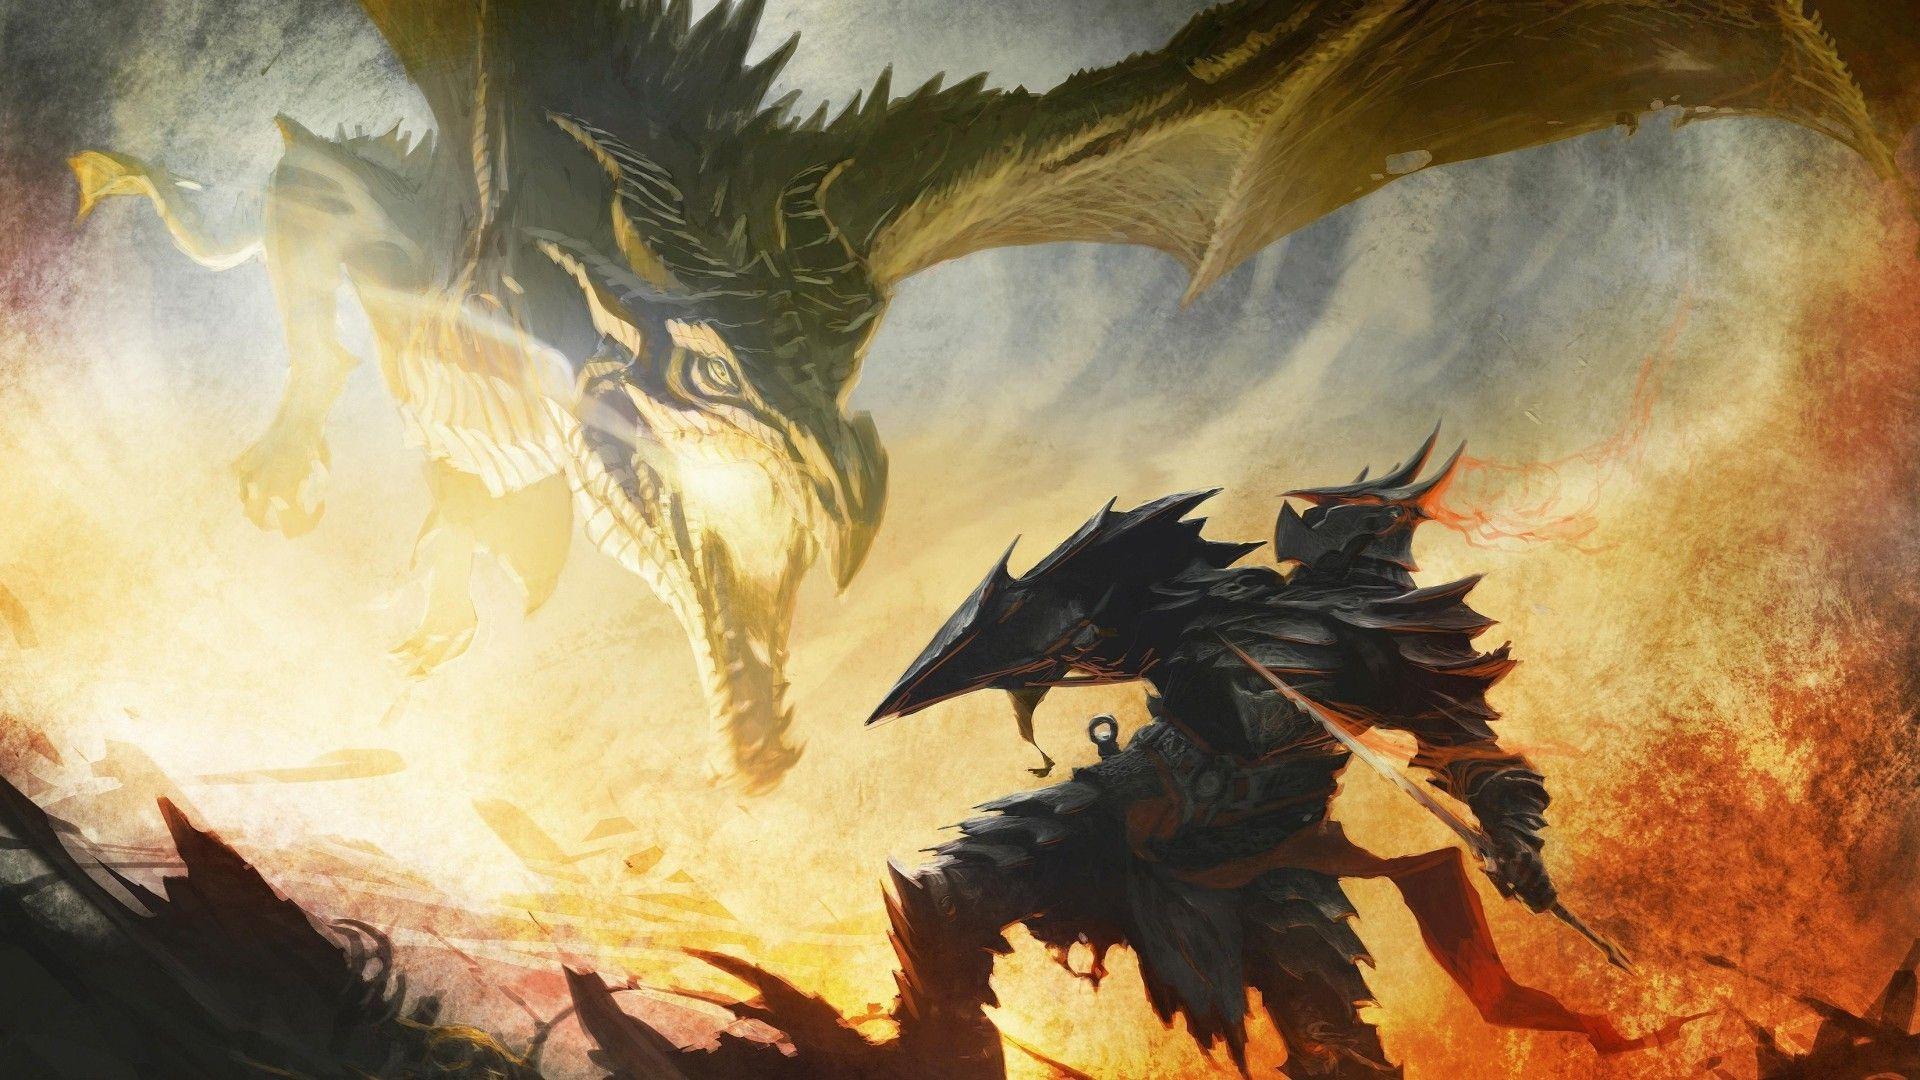 The Elder Scrolls V: Skyrim, Alduin, Dragonborn Wallpaper HD